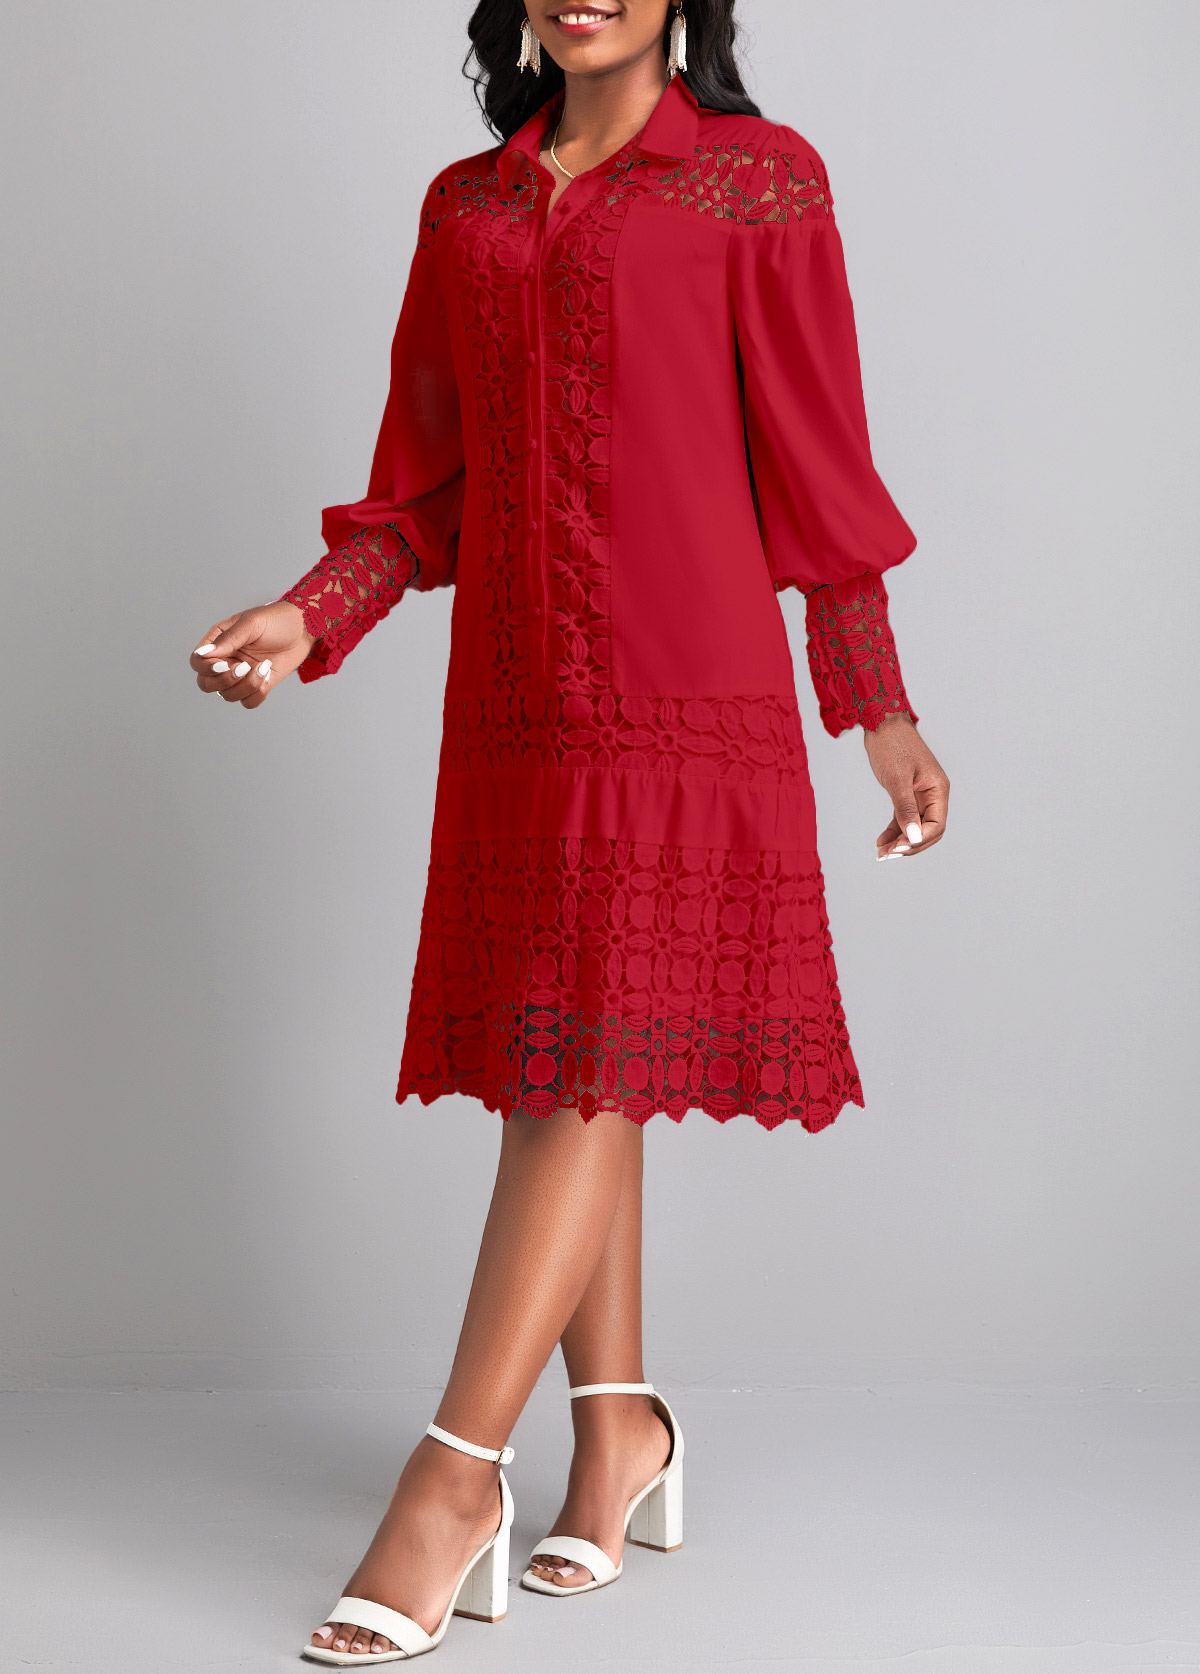 Lace Wine Red Long Sleeve Shirt Collar Shift Dress